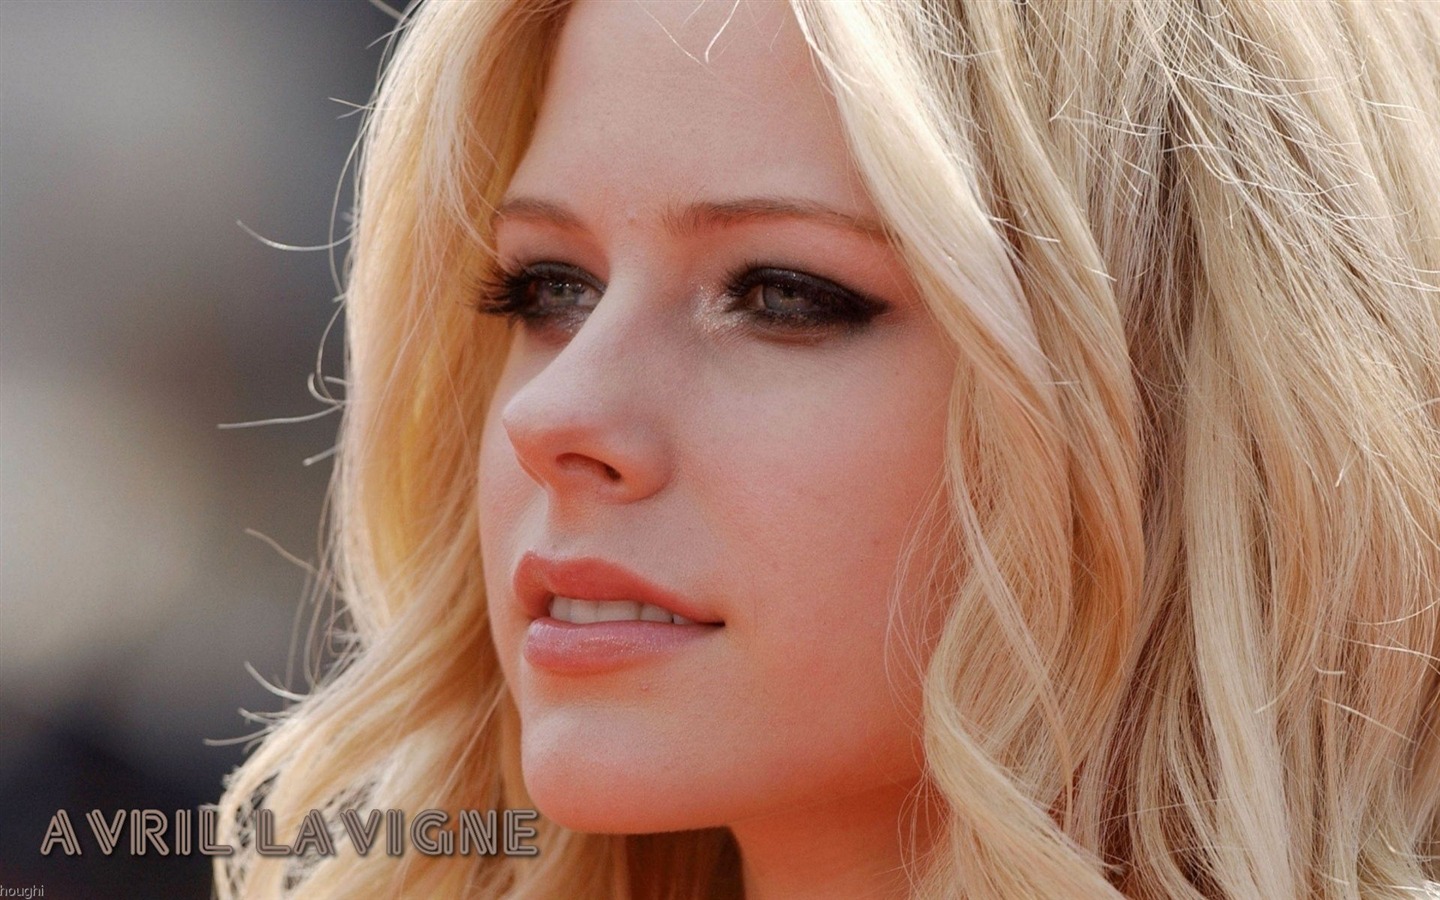 Avril Lavigne beautiful wallpaper #33 - 1440x900